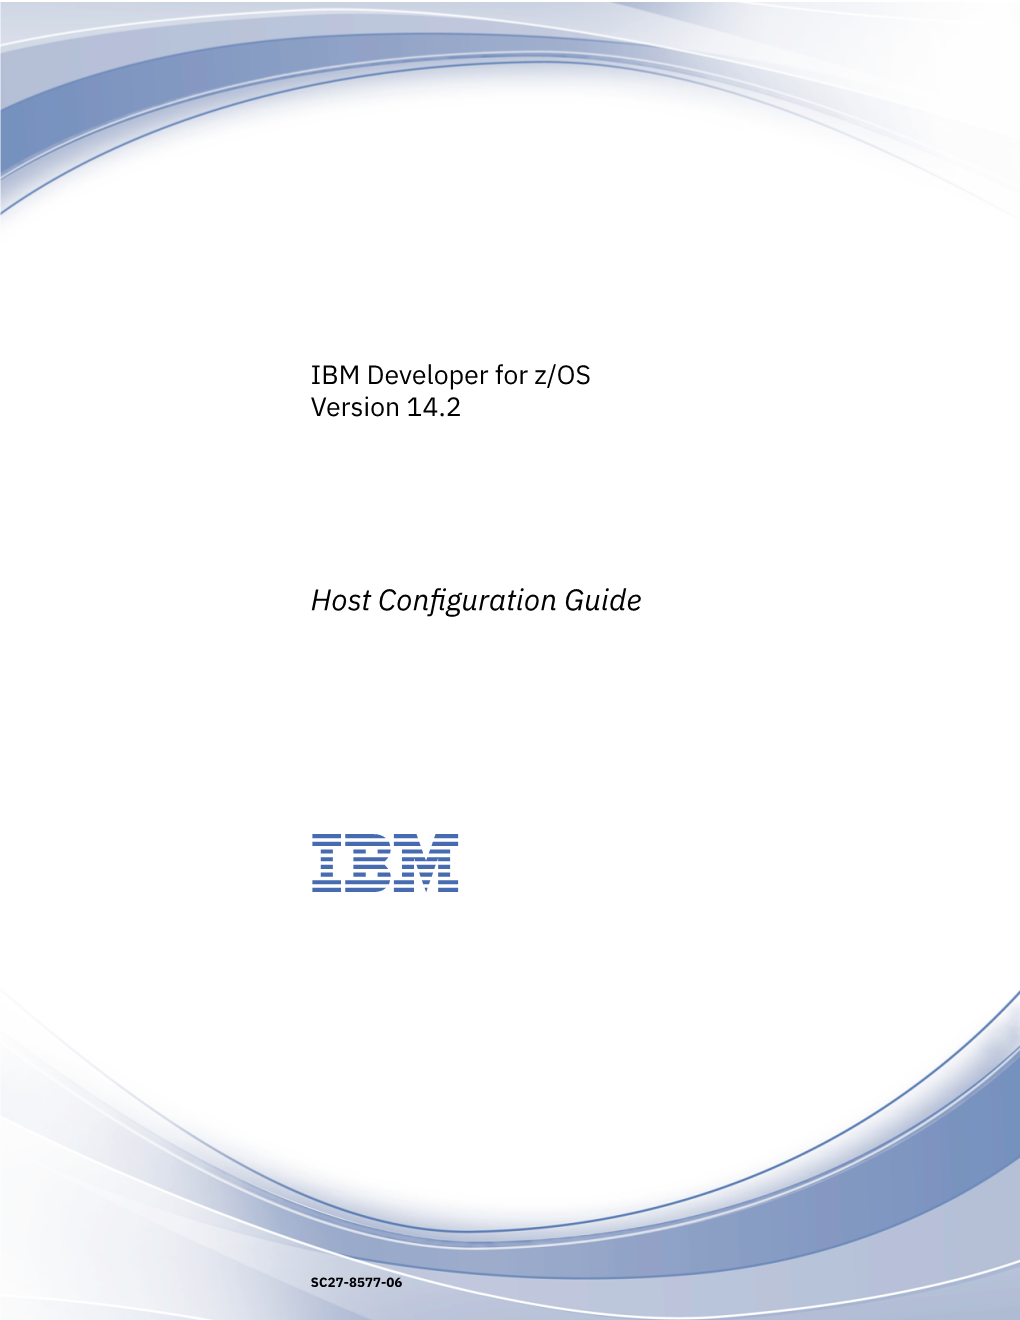 IBM Developer for Z/OS Host Configuration Guide